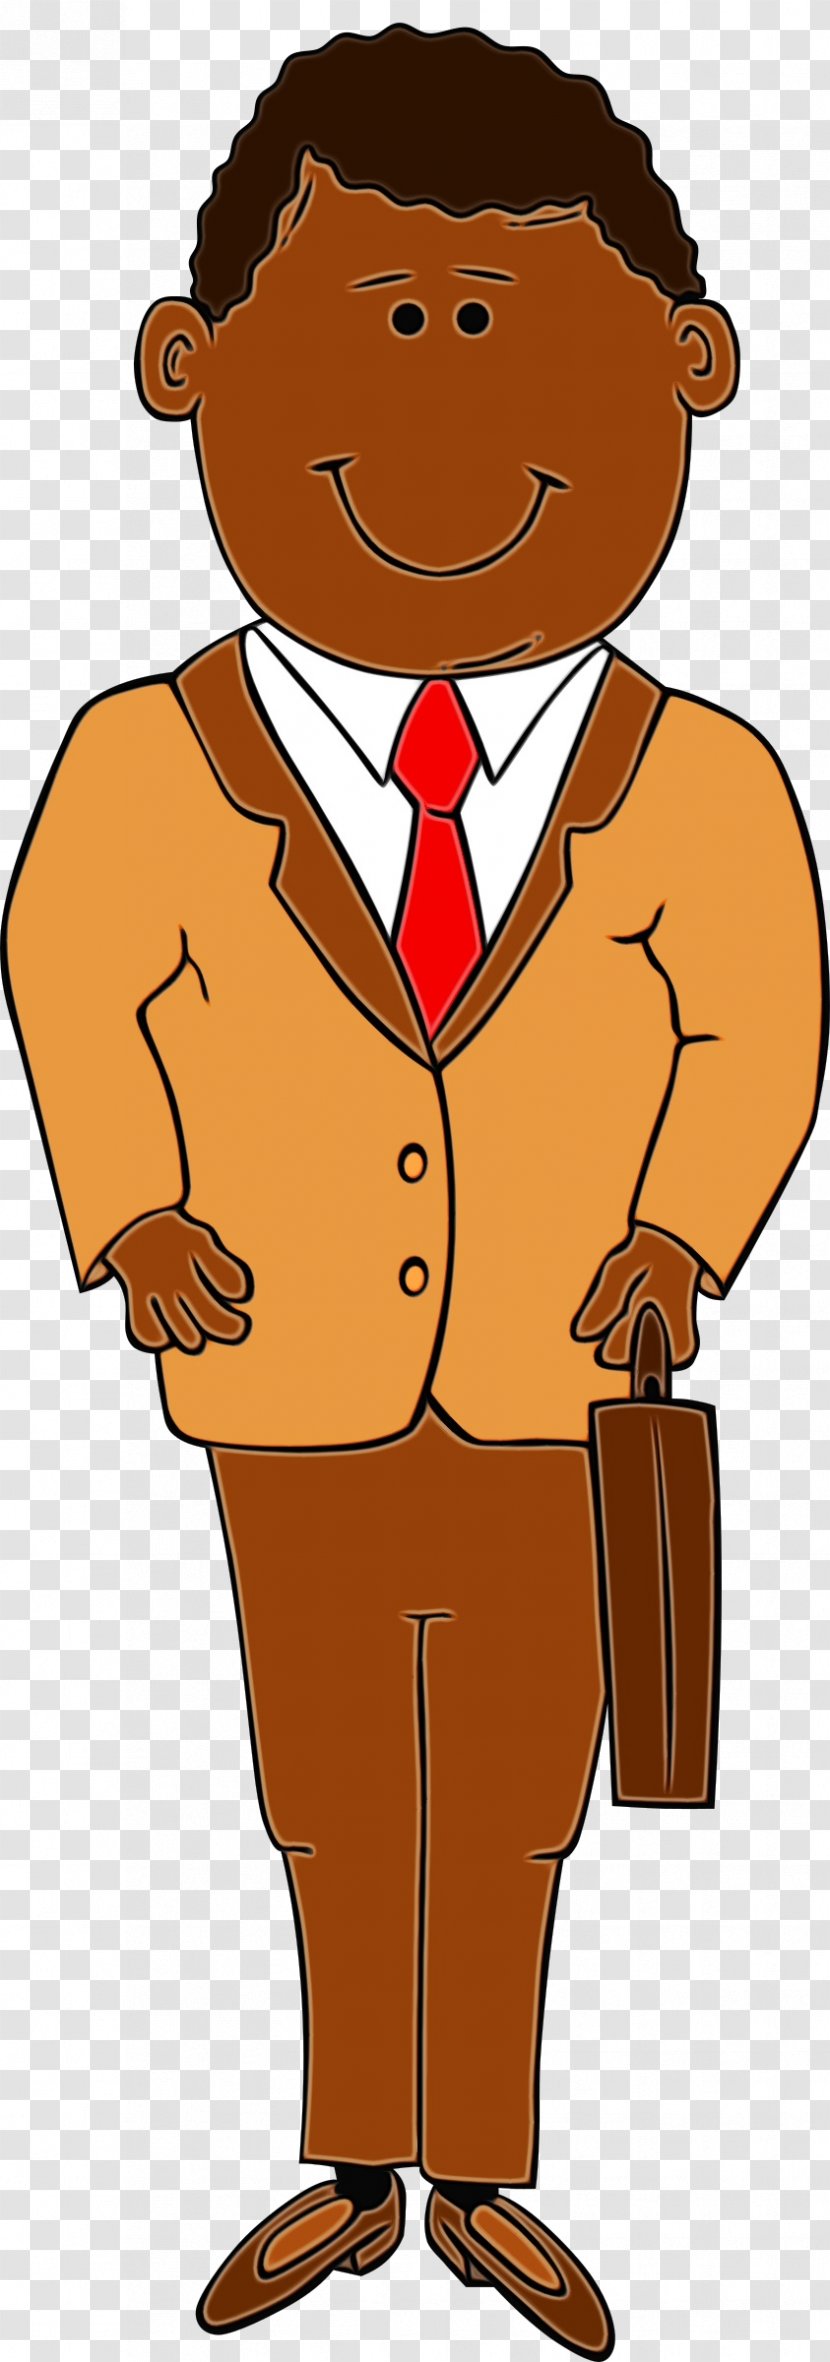 Boy Cartoon - Tuxedo Gentleman Transparent PNG